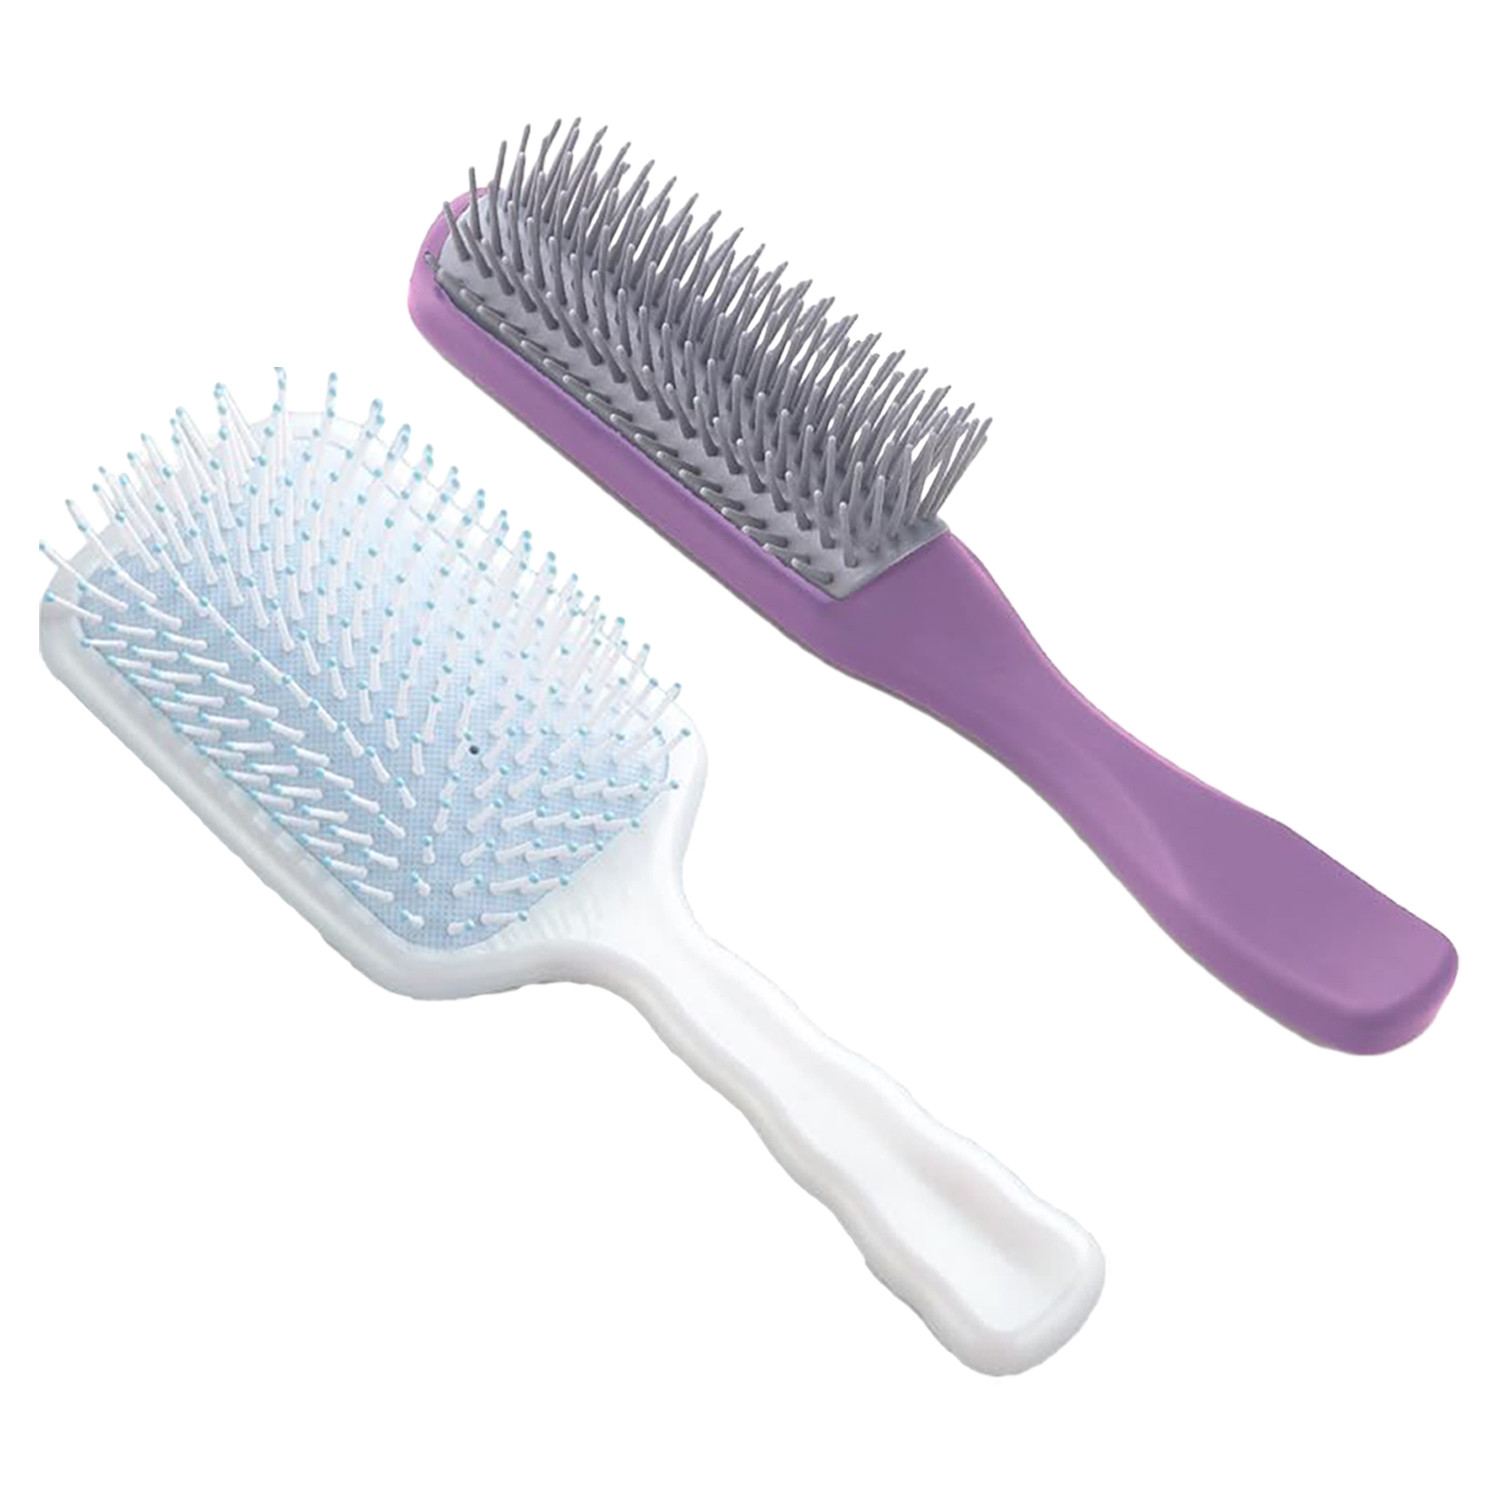 Kuber Industries Hair Brush | Flexible Bristles Brush | Hair Brush with Paddle | Straightens & Detangles Hair Brush | Suitable For All Hair Types | Hair Brush Styling Hair | Set of 2 | Blue & Purple